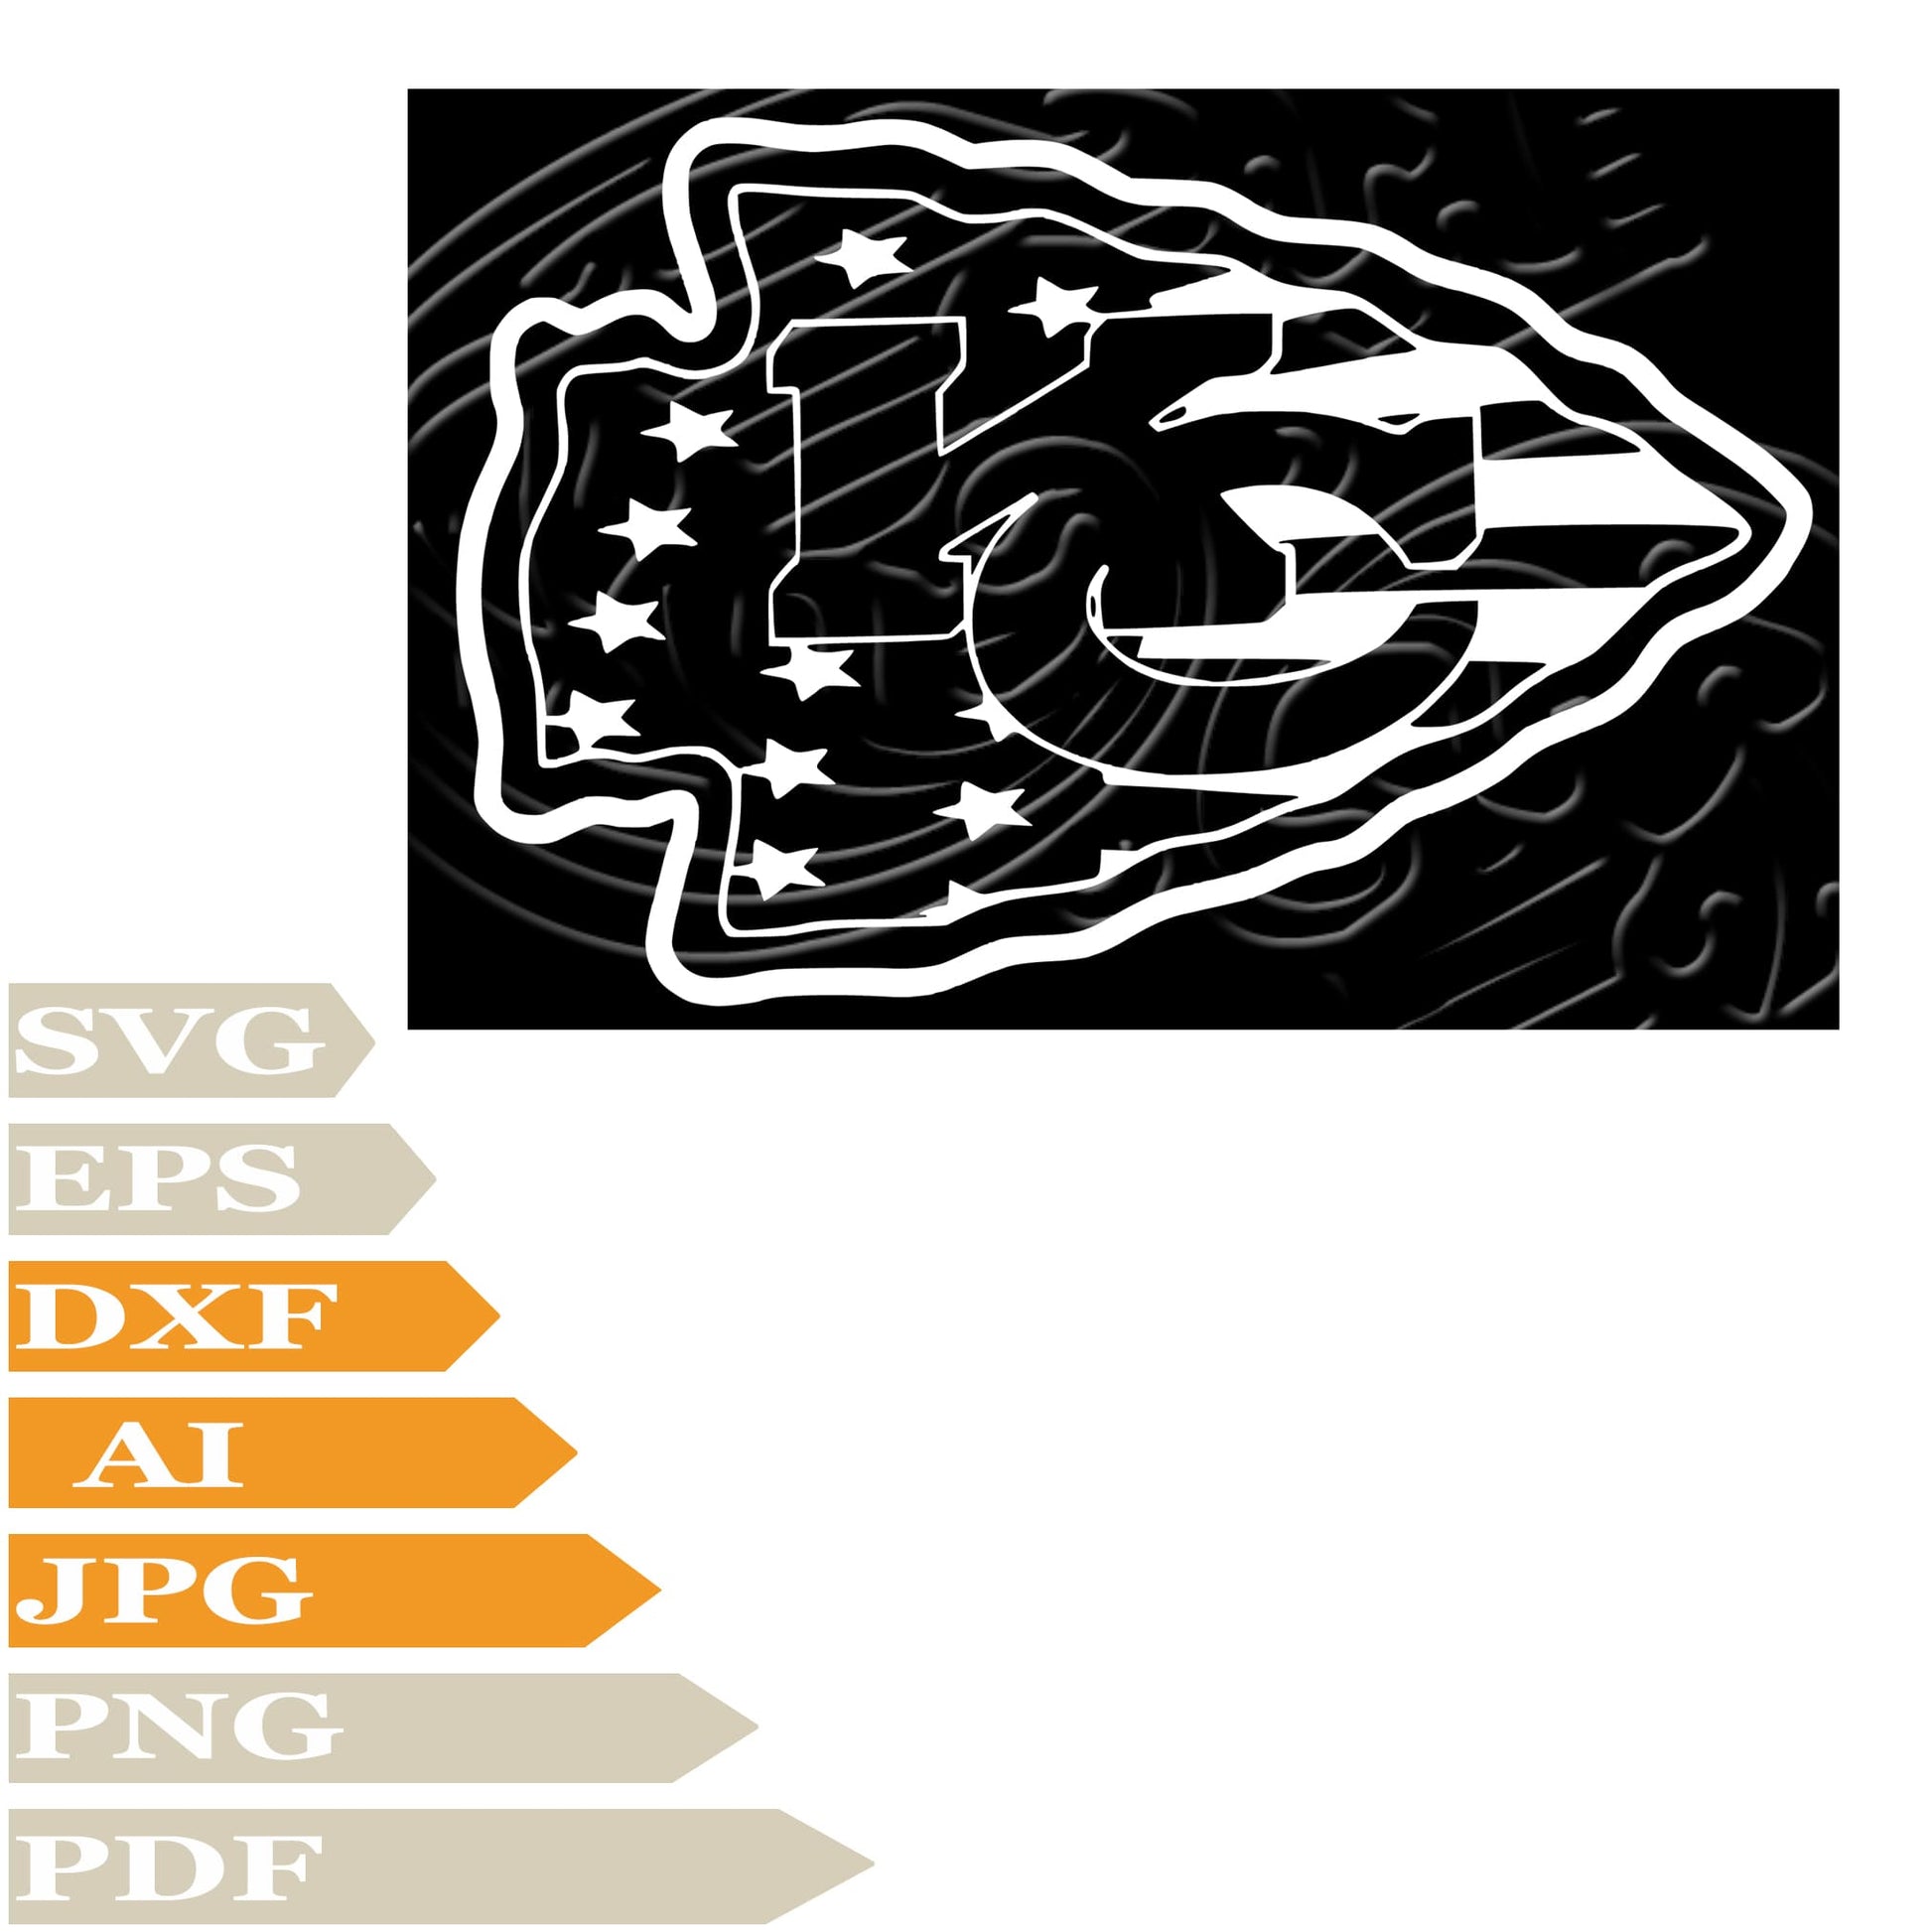 Kansas City Football, Kansas City Chiefs Logo Svg File, Image Cut, Png, For Tattoo, Silhouette, Digital Vector Download, Cut File, Clipart, For Cricut